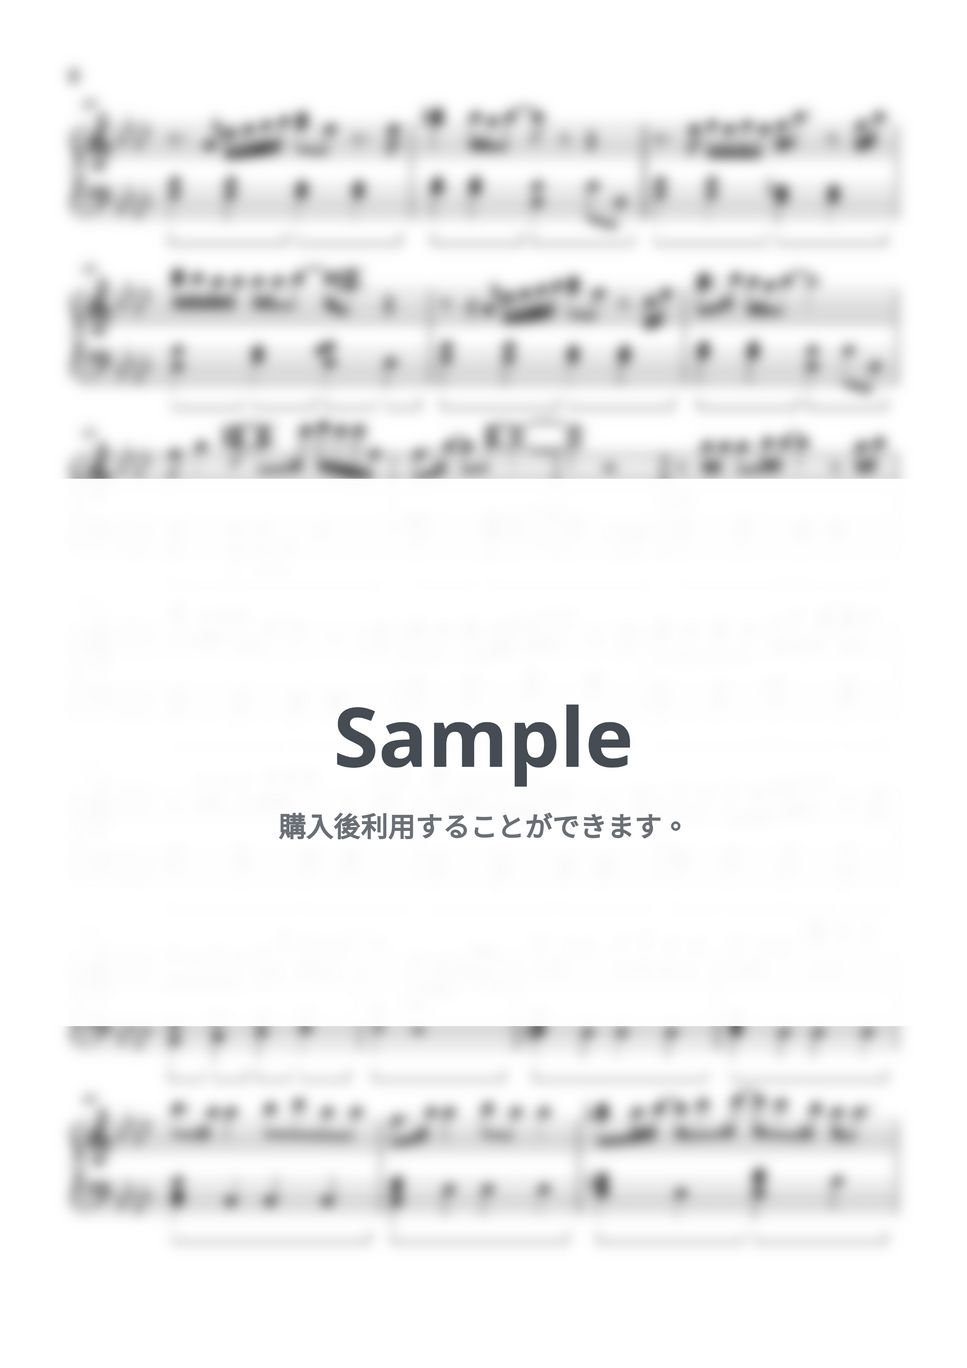 HY - 366日 (簡単楽譜) by ピアノ塾